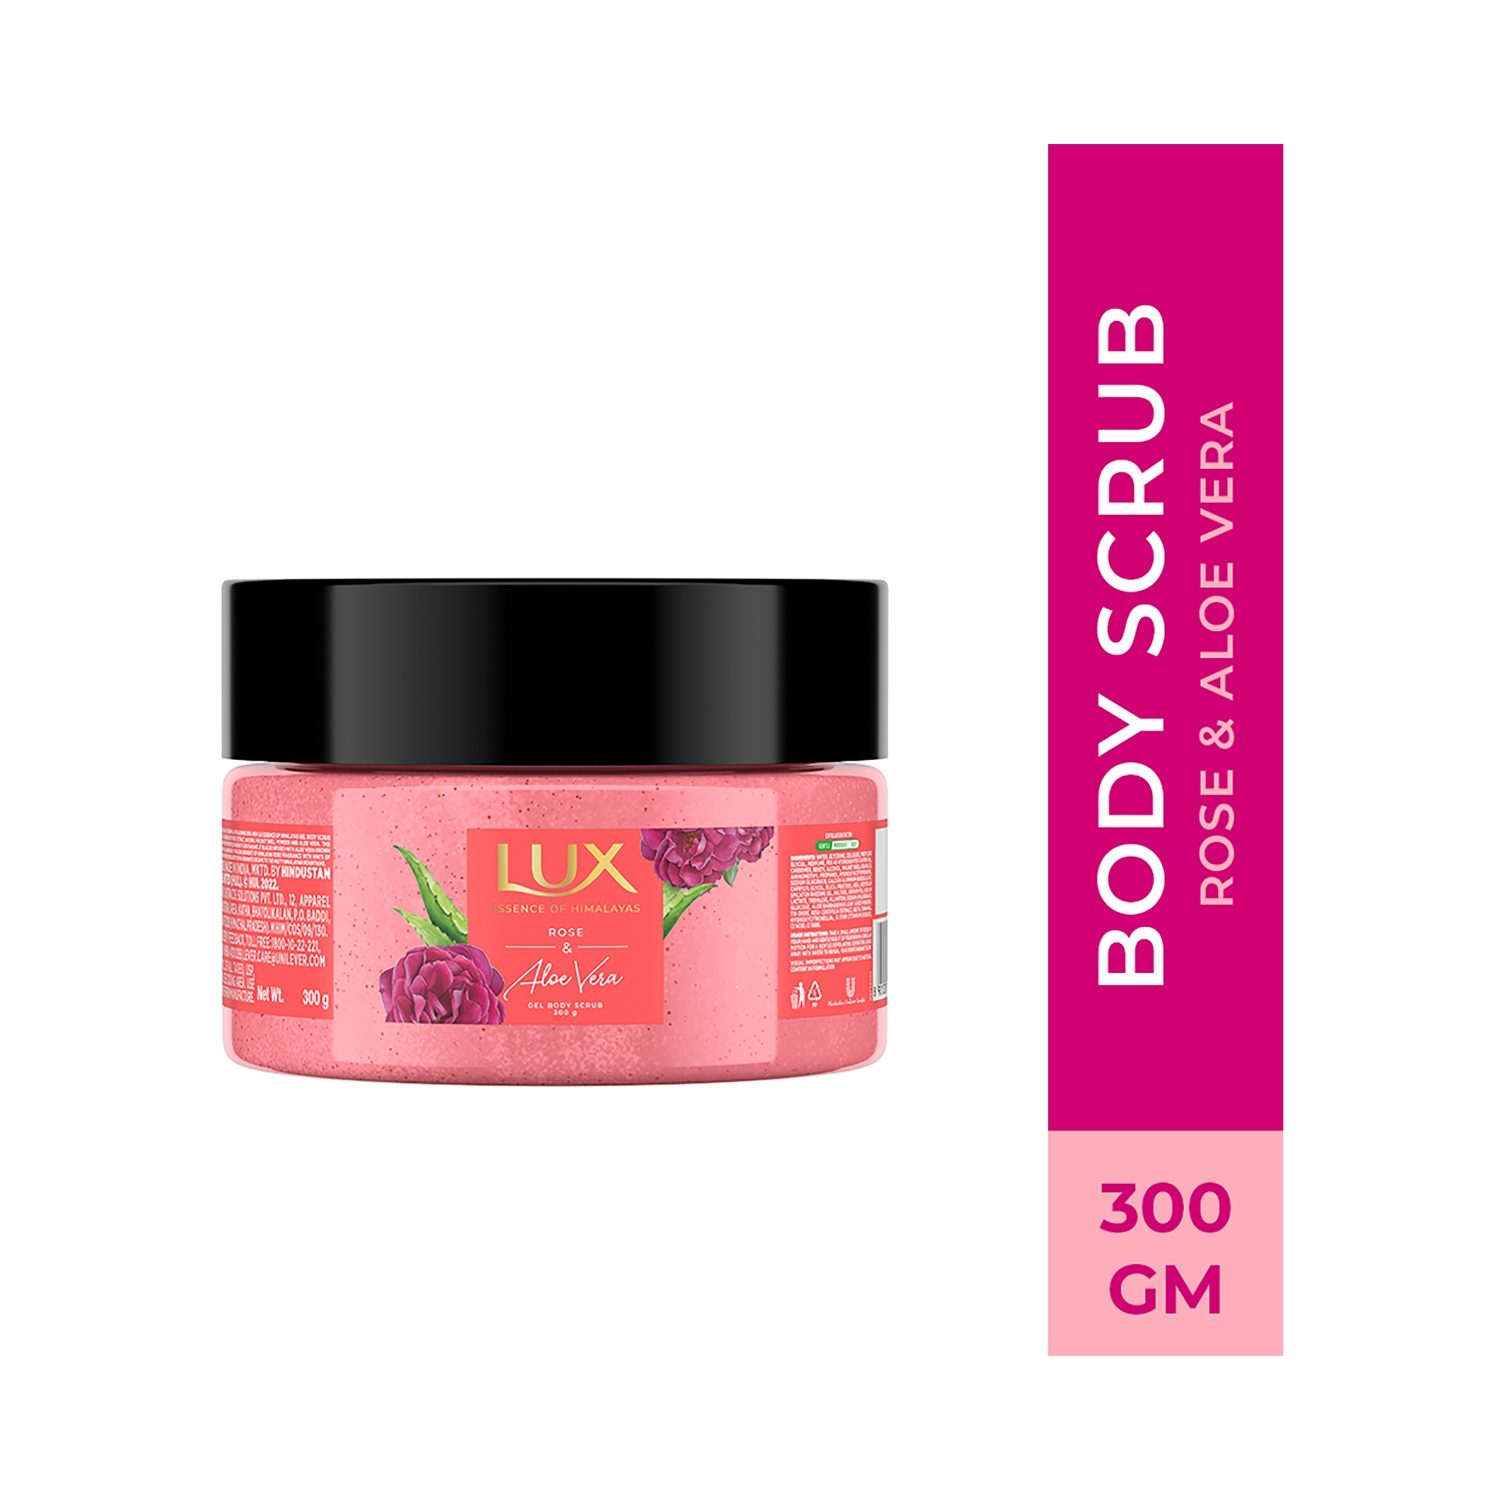 Lux Rose & Aloe Vera Gel Body Scrub (300g)